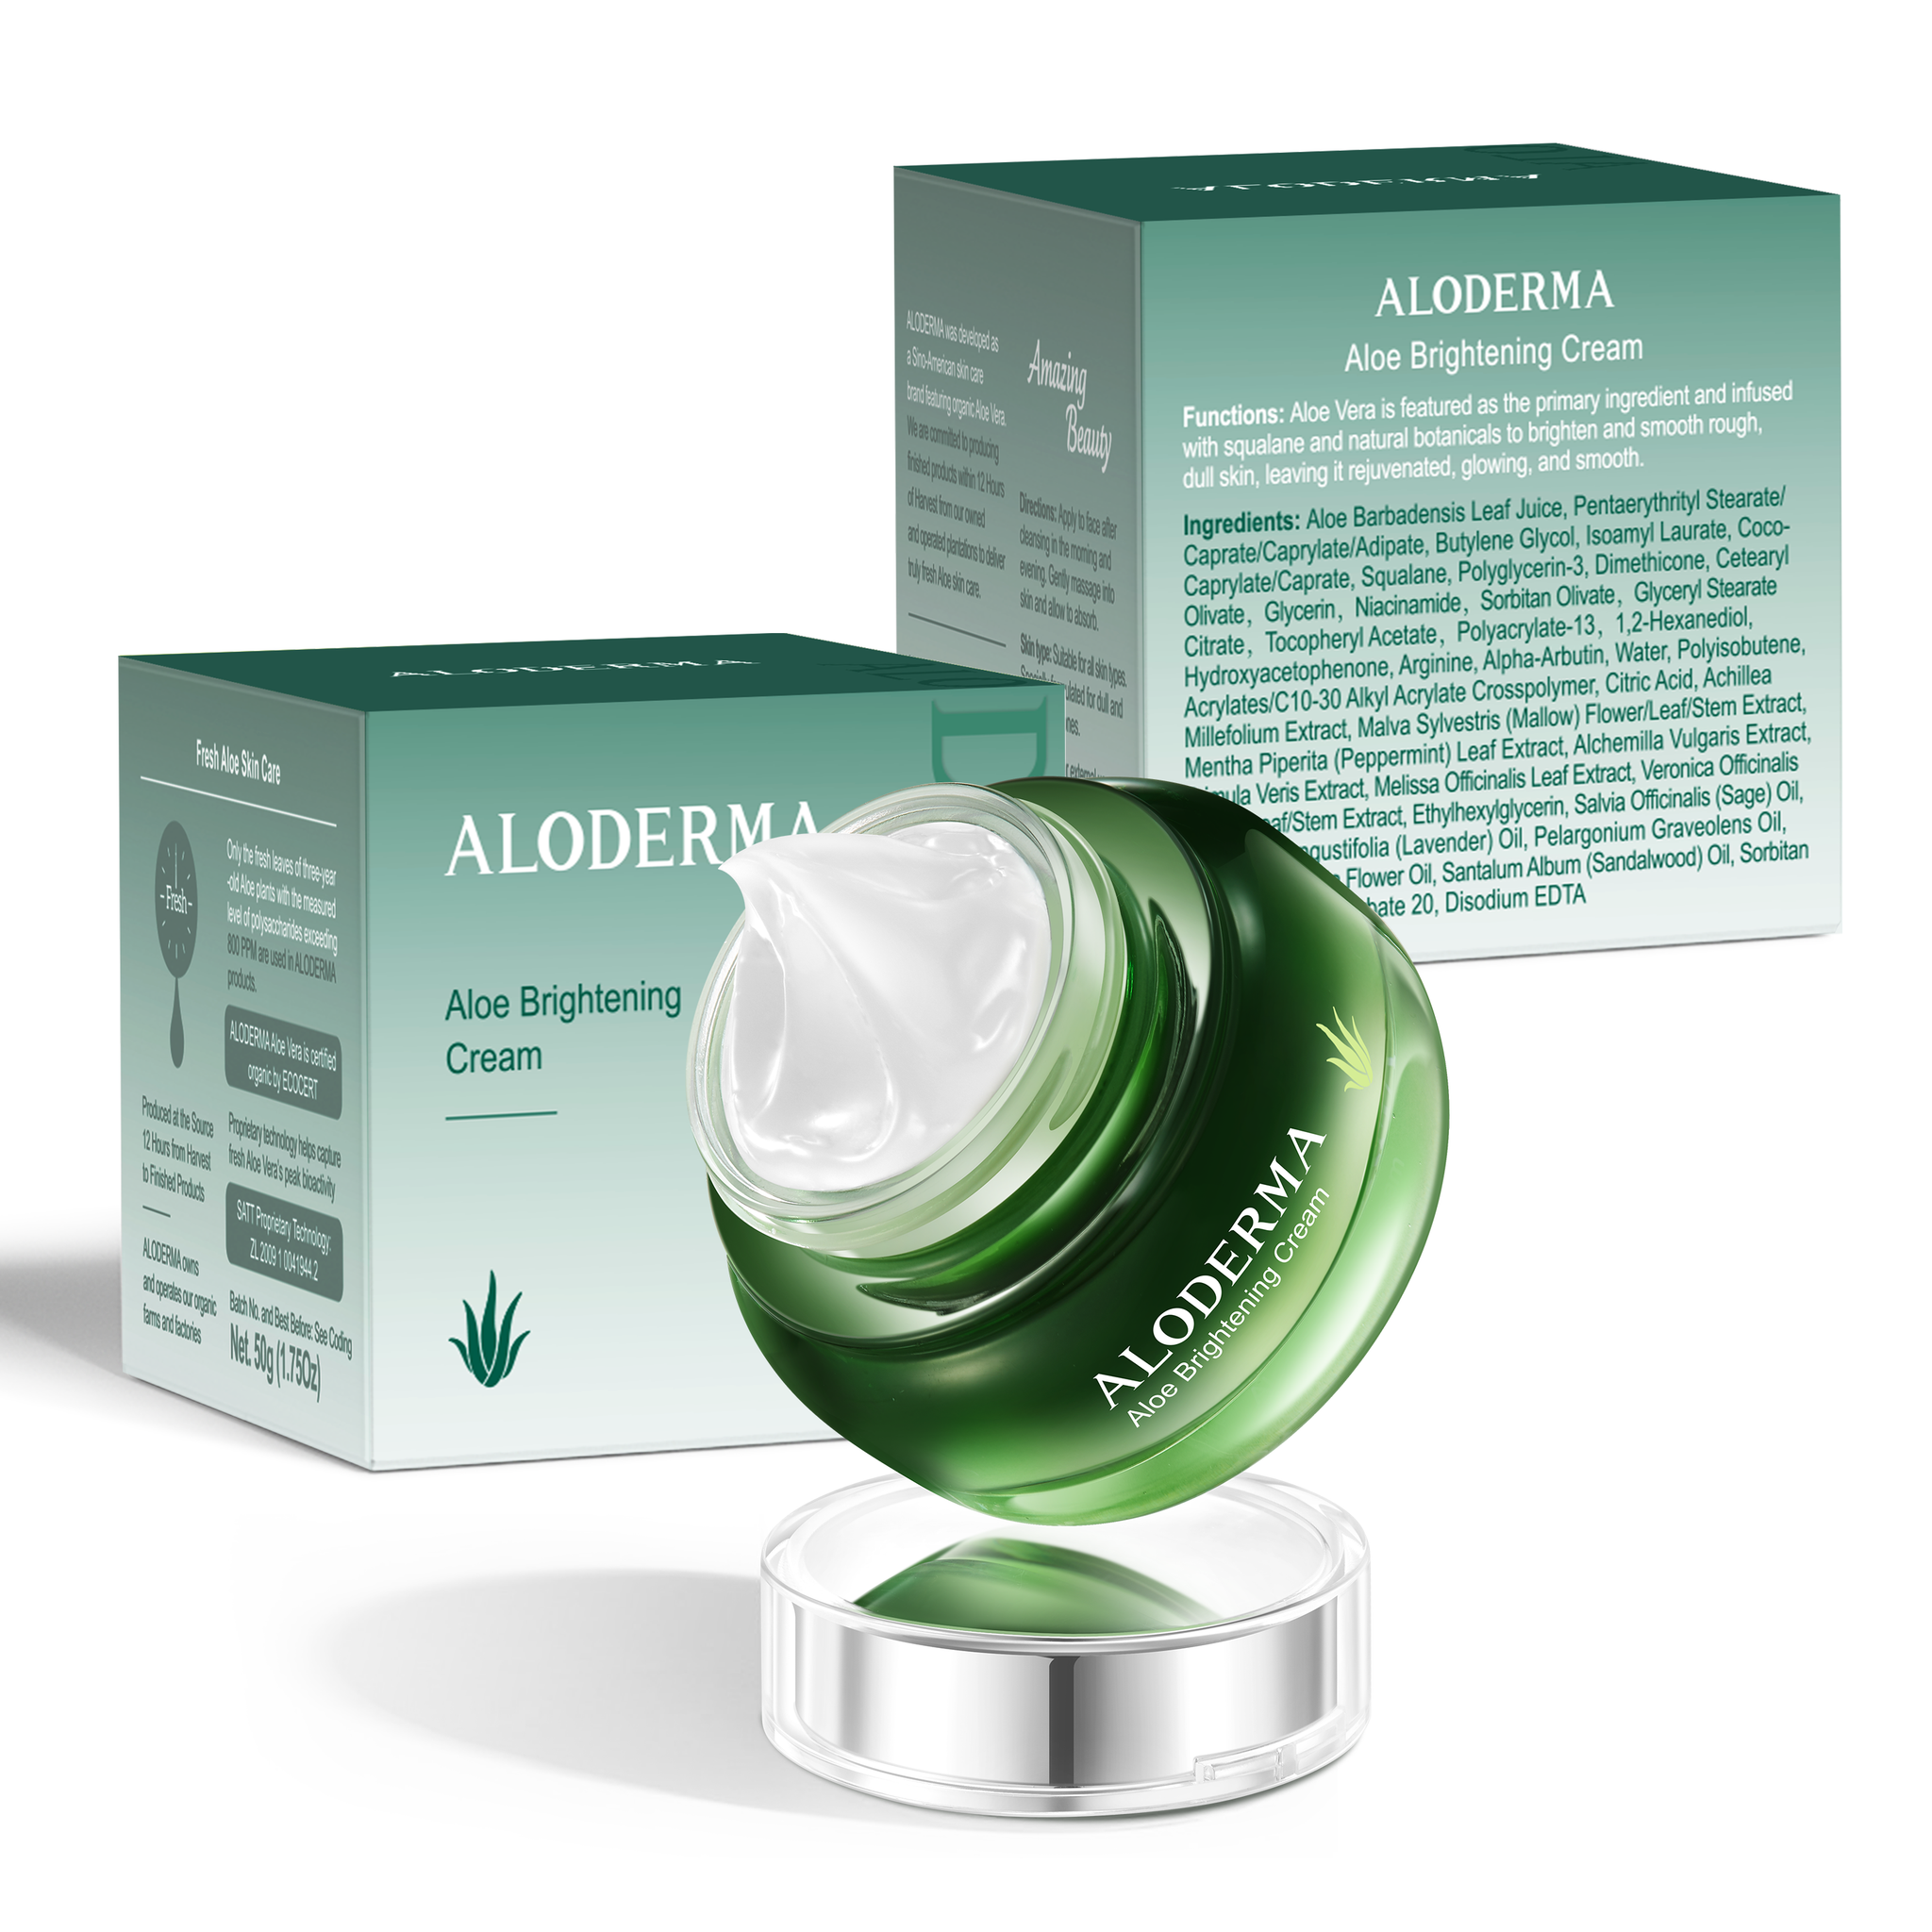 Aloe Brightening Skin Cream - ALODERMA